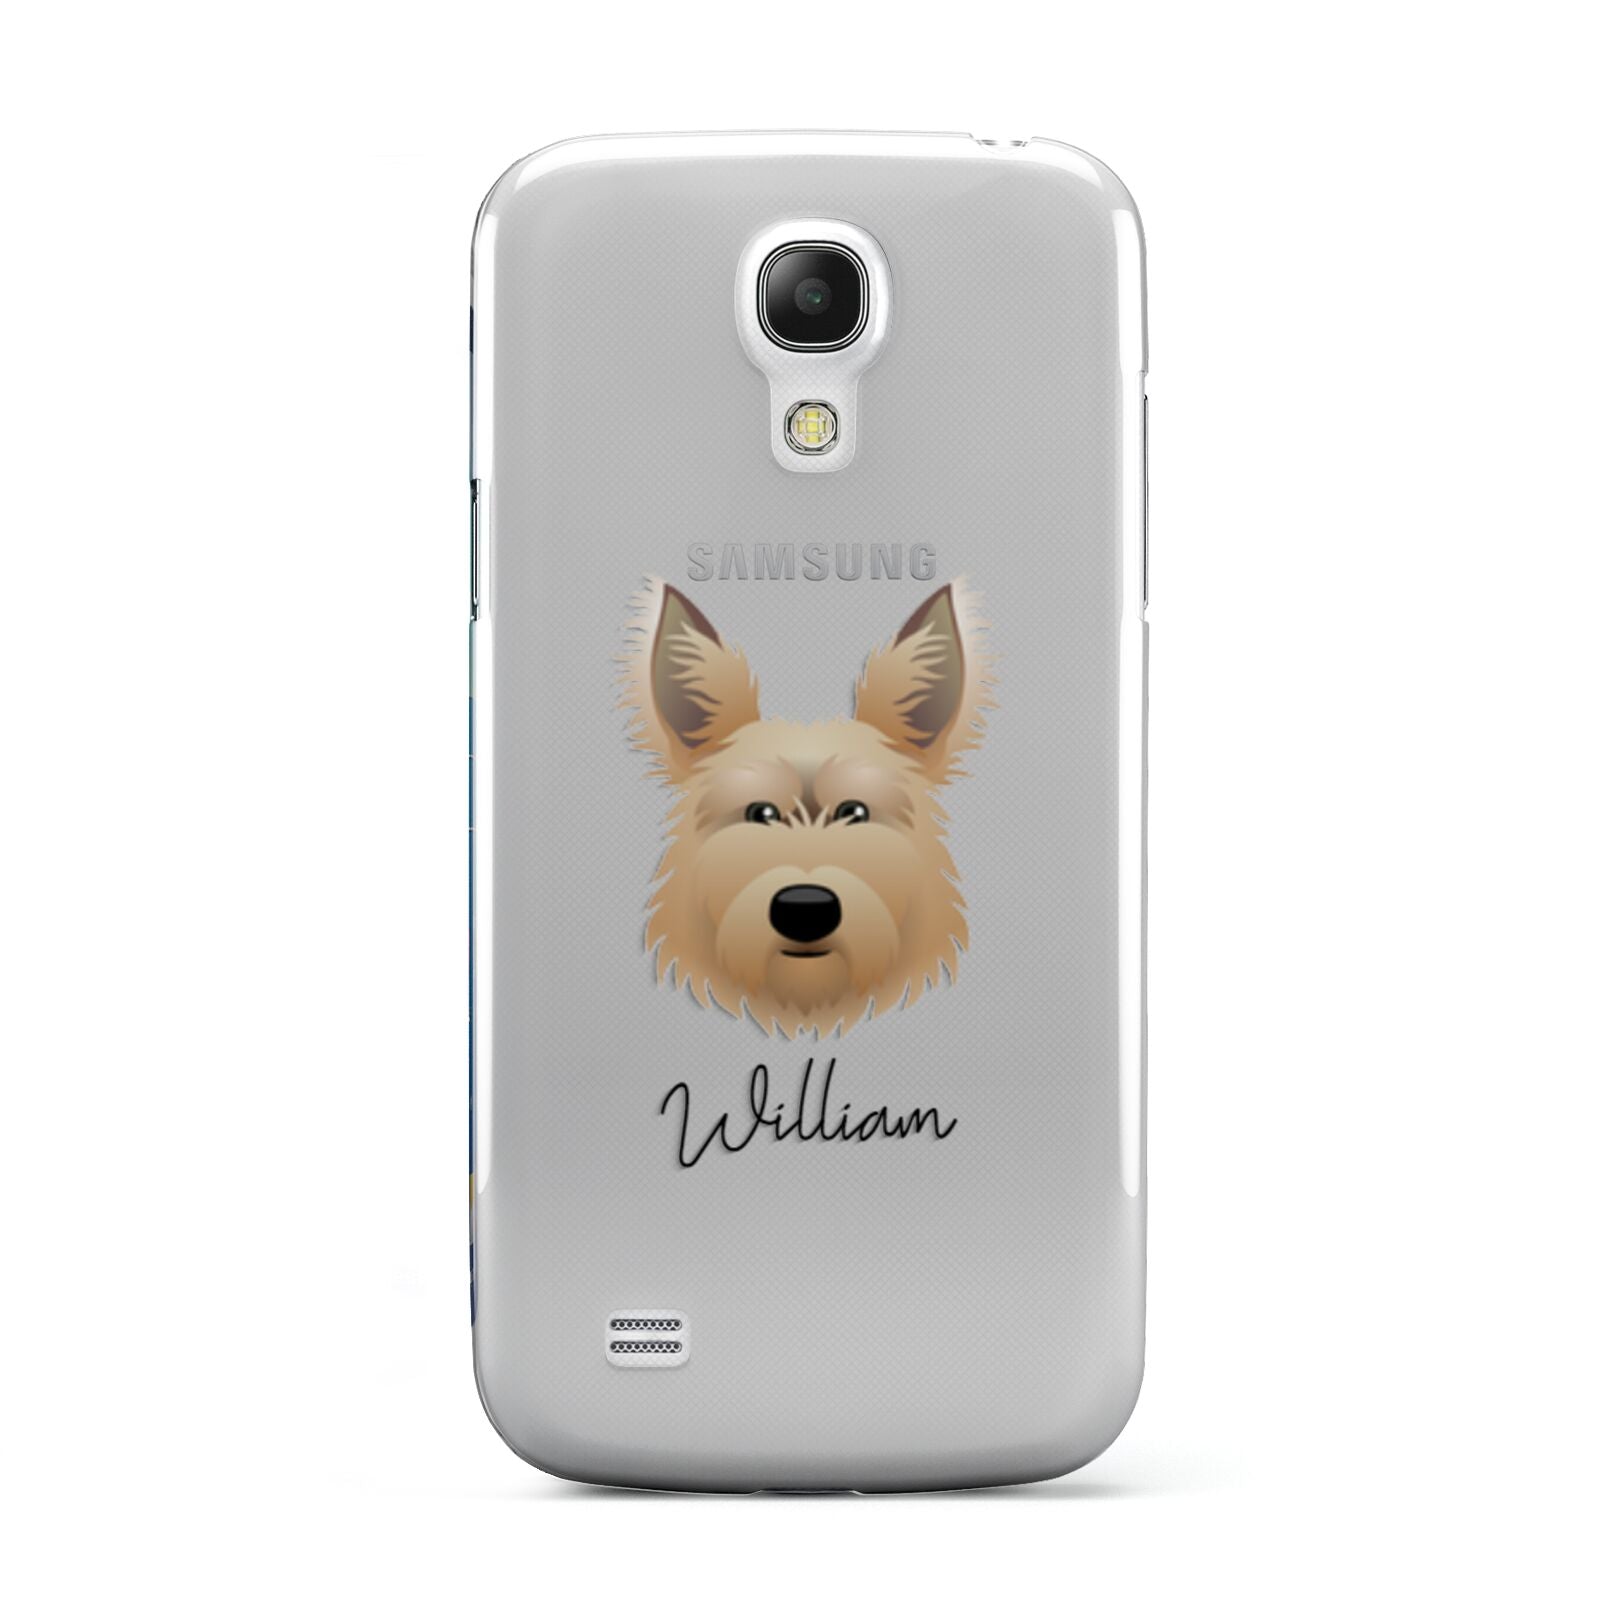 Picardy Sheepdog Personalised Samsung Galaxy S4 Mini Case